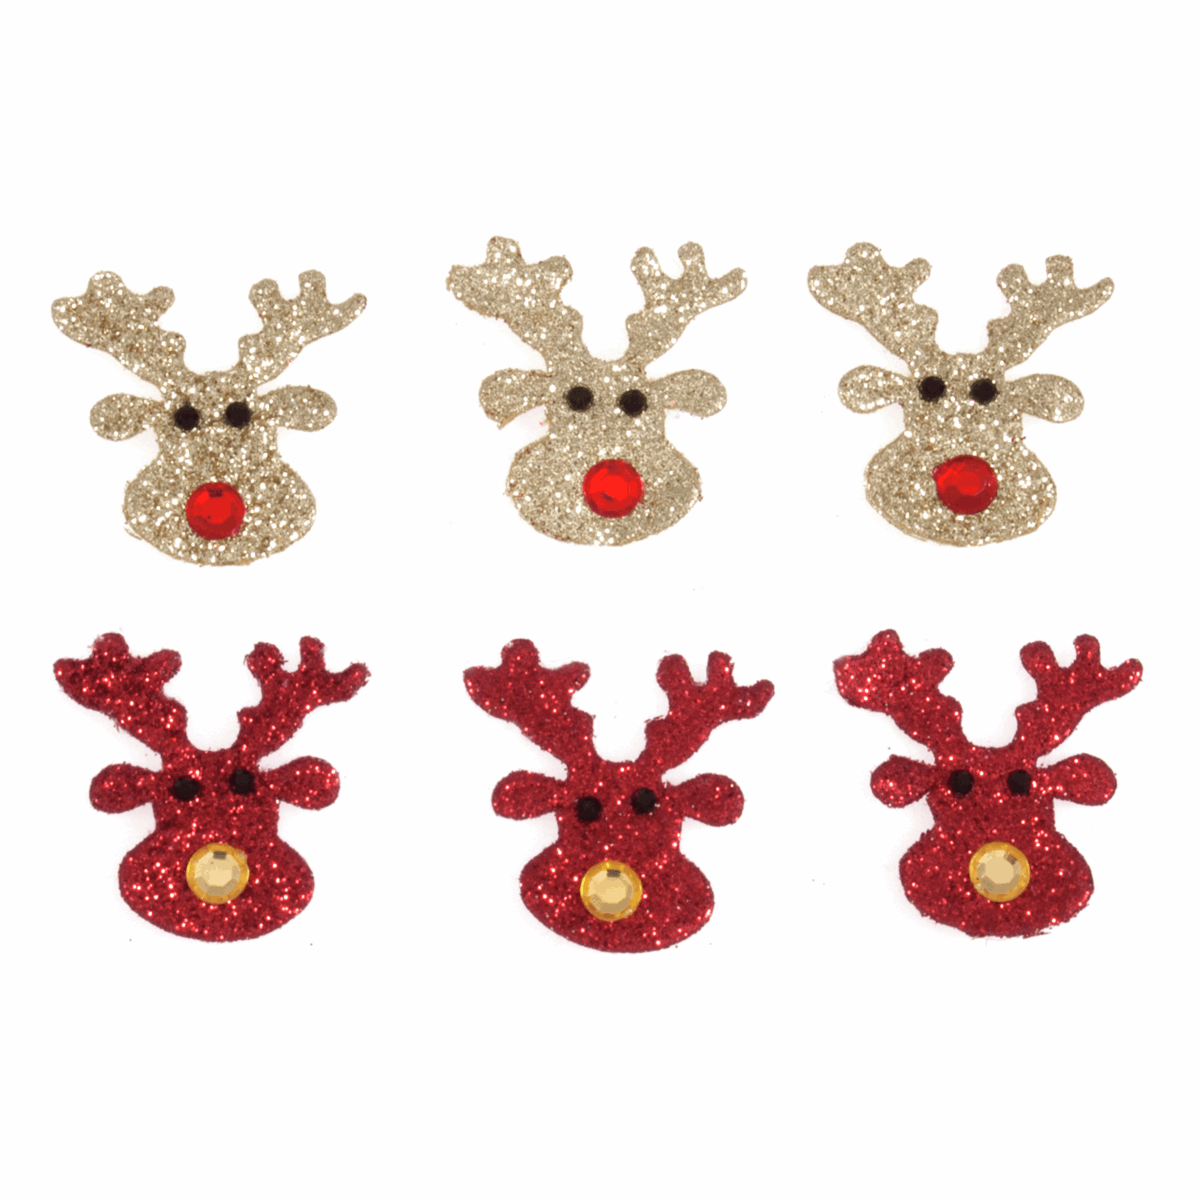 Craft Embellishments - Stick On Glittered Christmas Themed Motifs